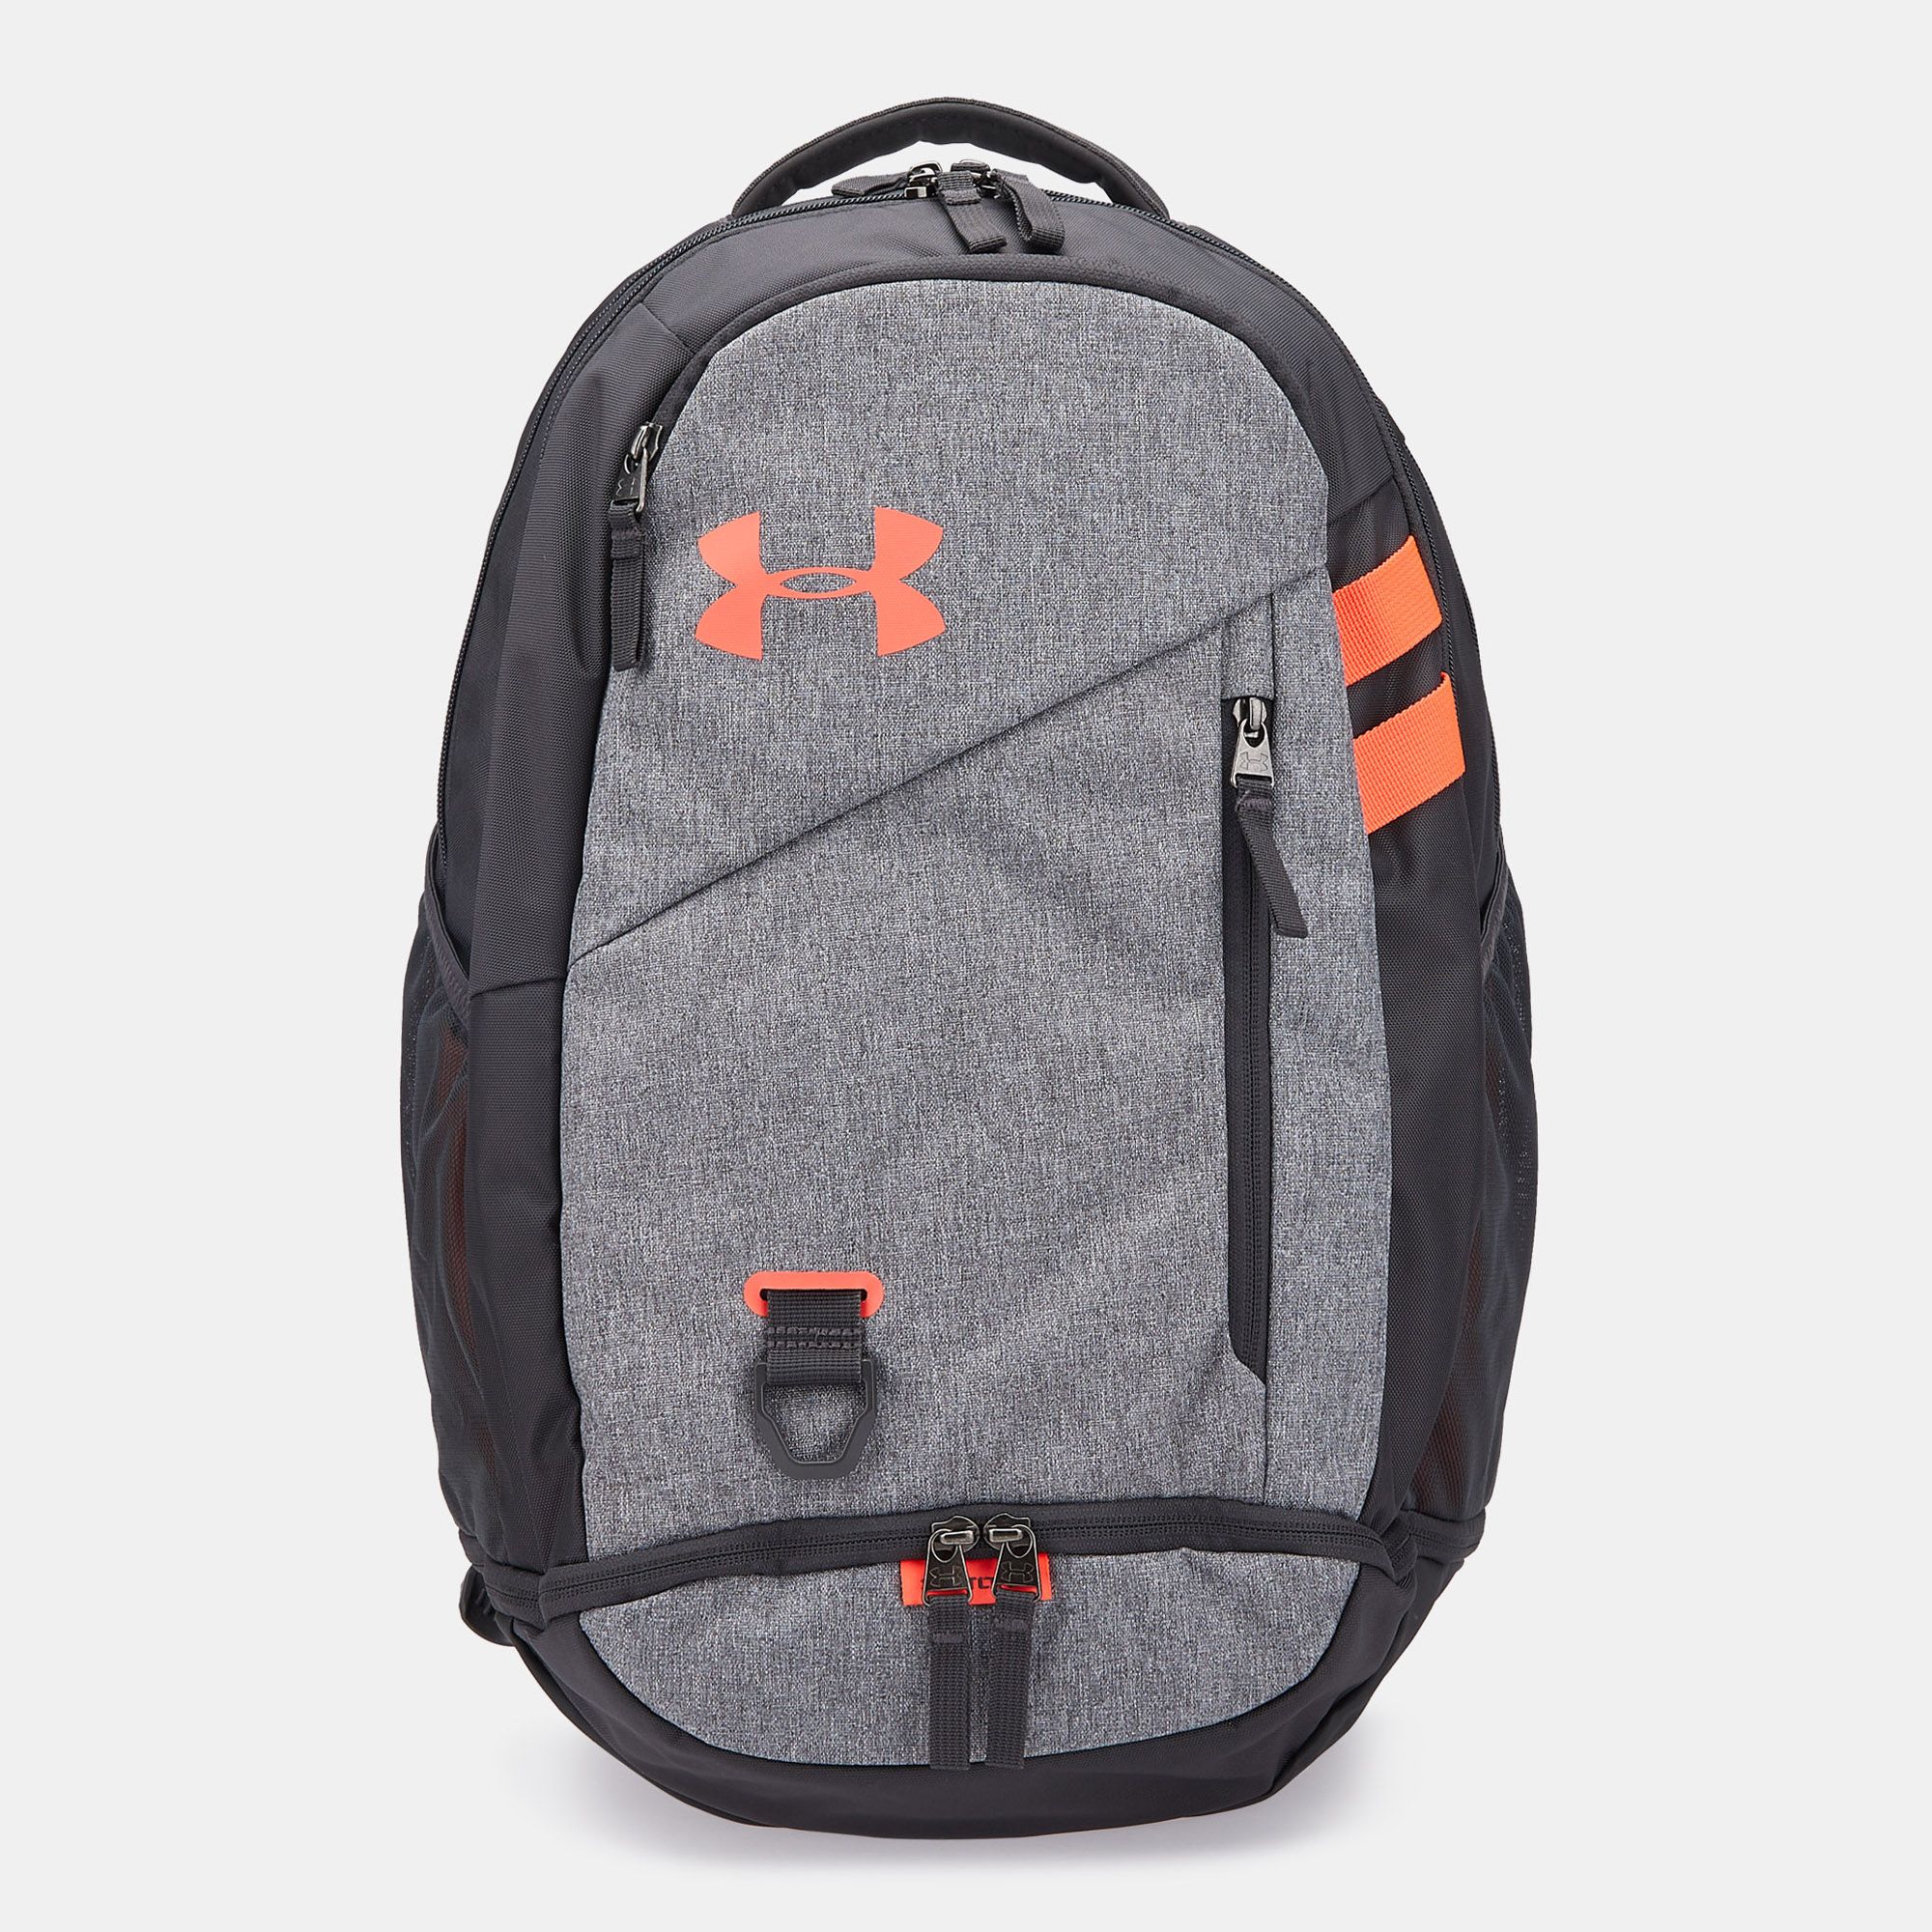 hustle 4.0 backpack